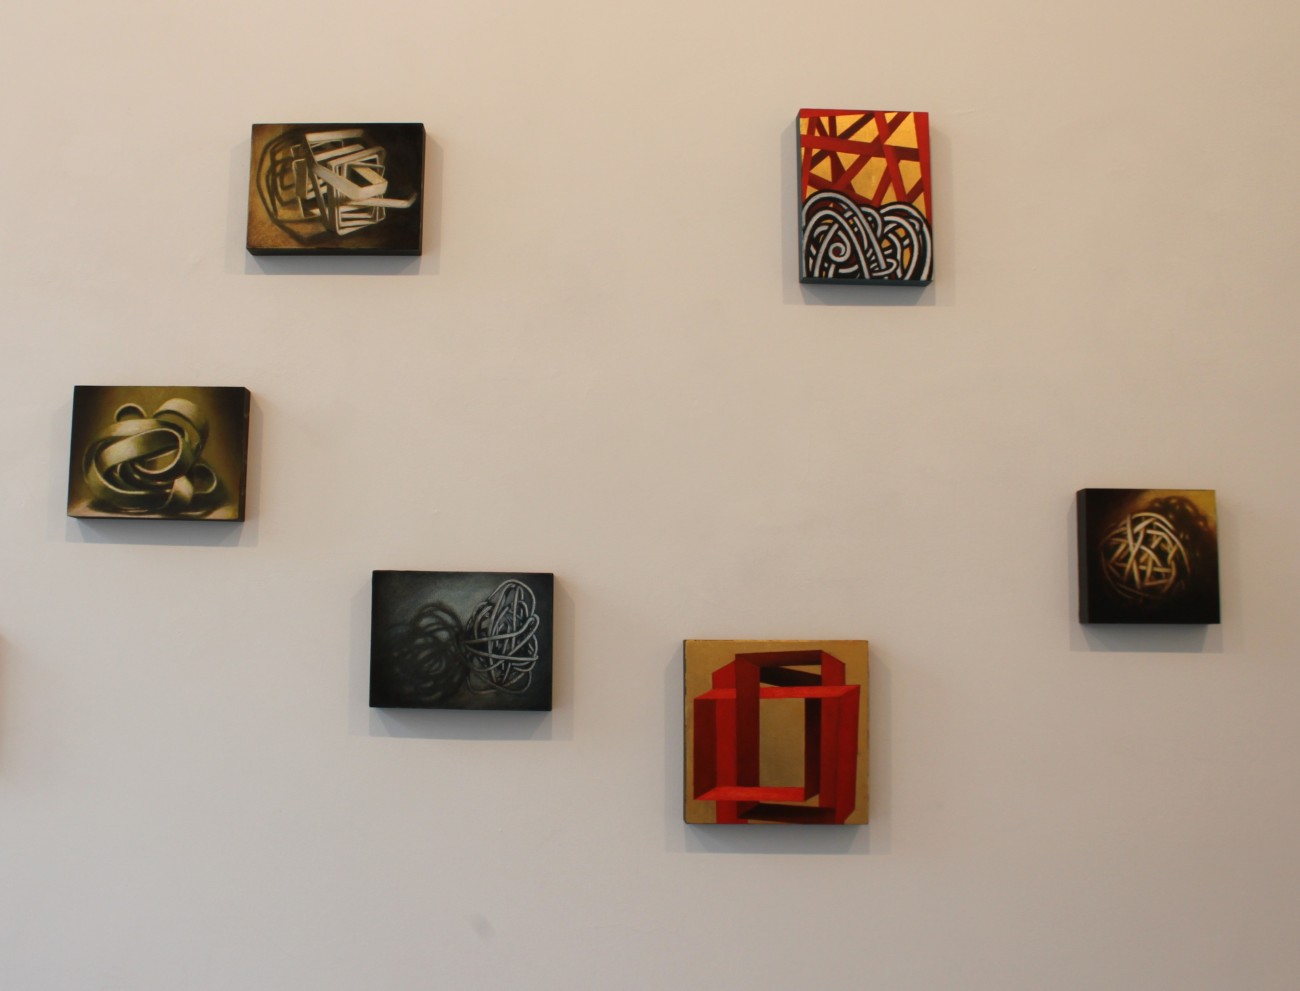 Wolfgang Leidhold, Knots and Icons, Installation view right part, 2014 Knoten und Ikonen, Installationsansicht rechter Teil, 2014